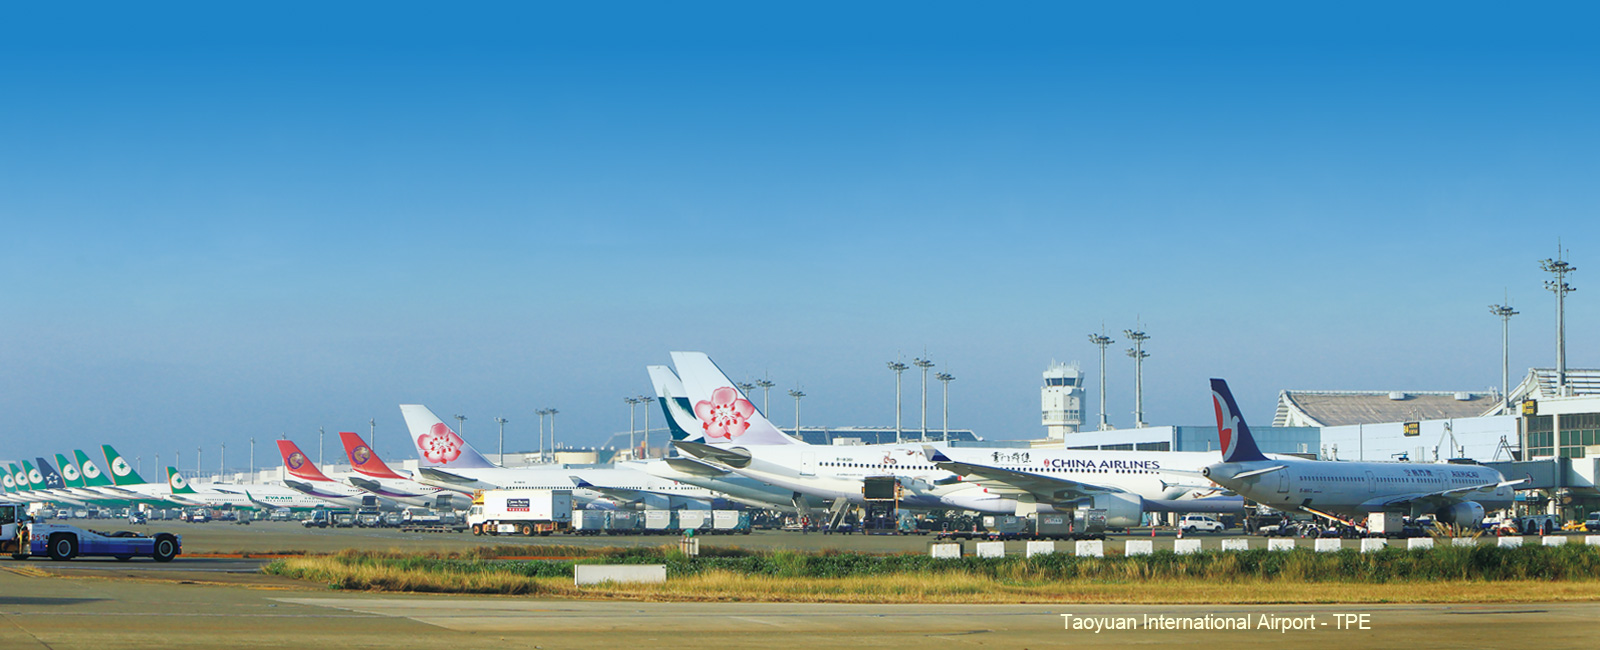 Taoyuan International Airport - TPE 桃園國際機場